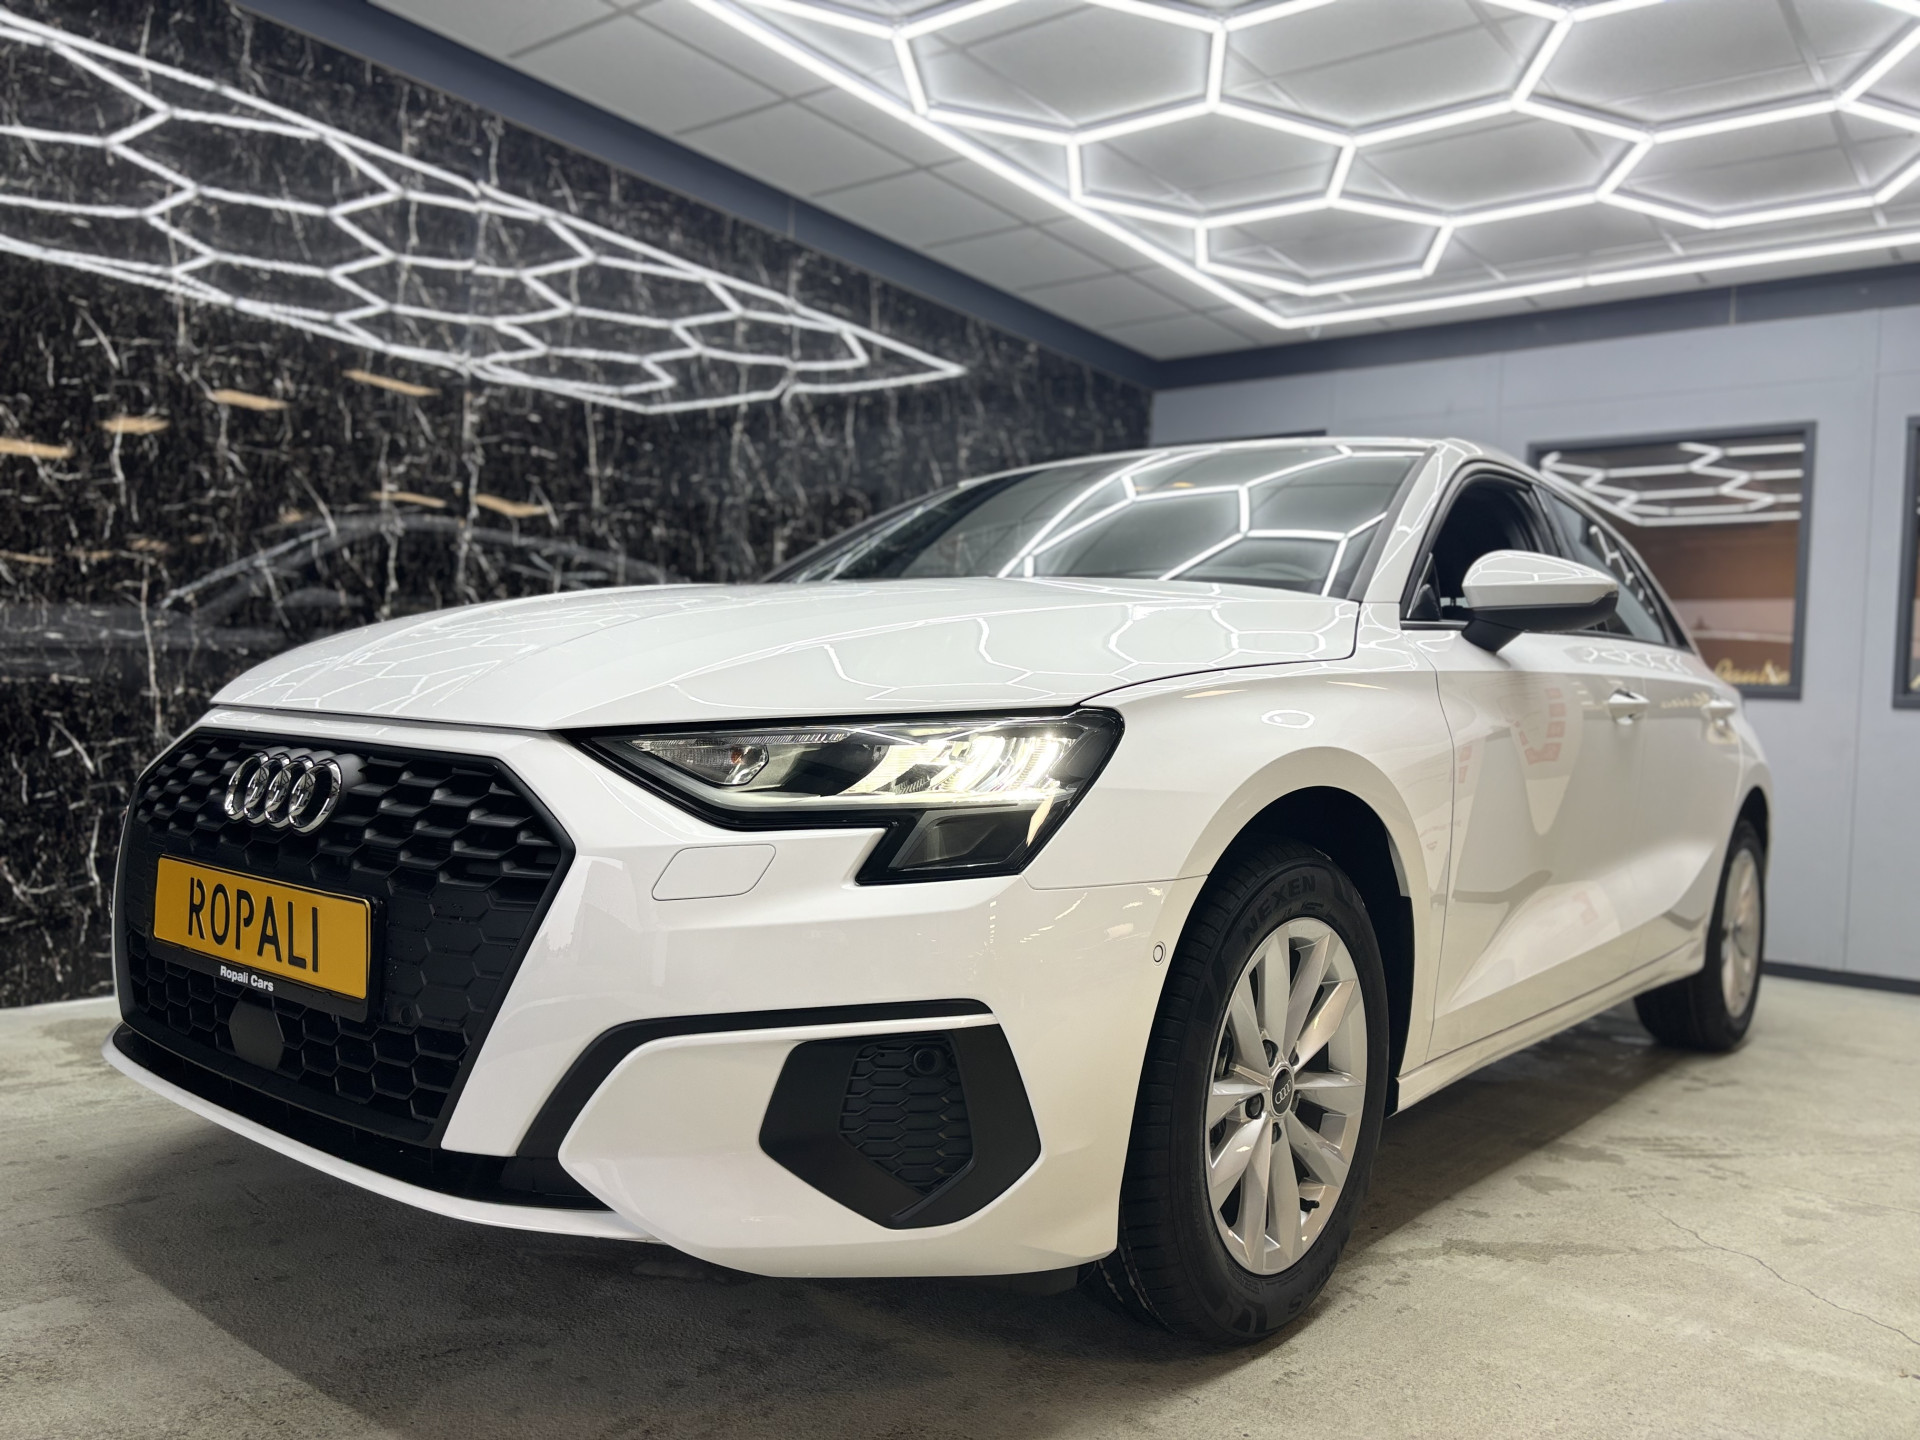 Audi-A3-Sportback 30 TFSI Business edition-ropalicars.nl